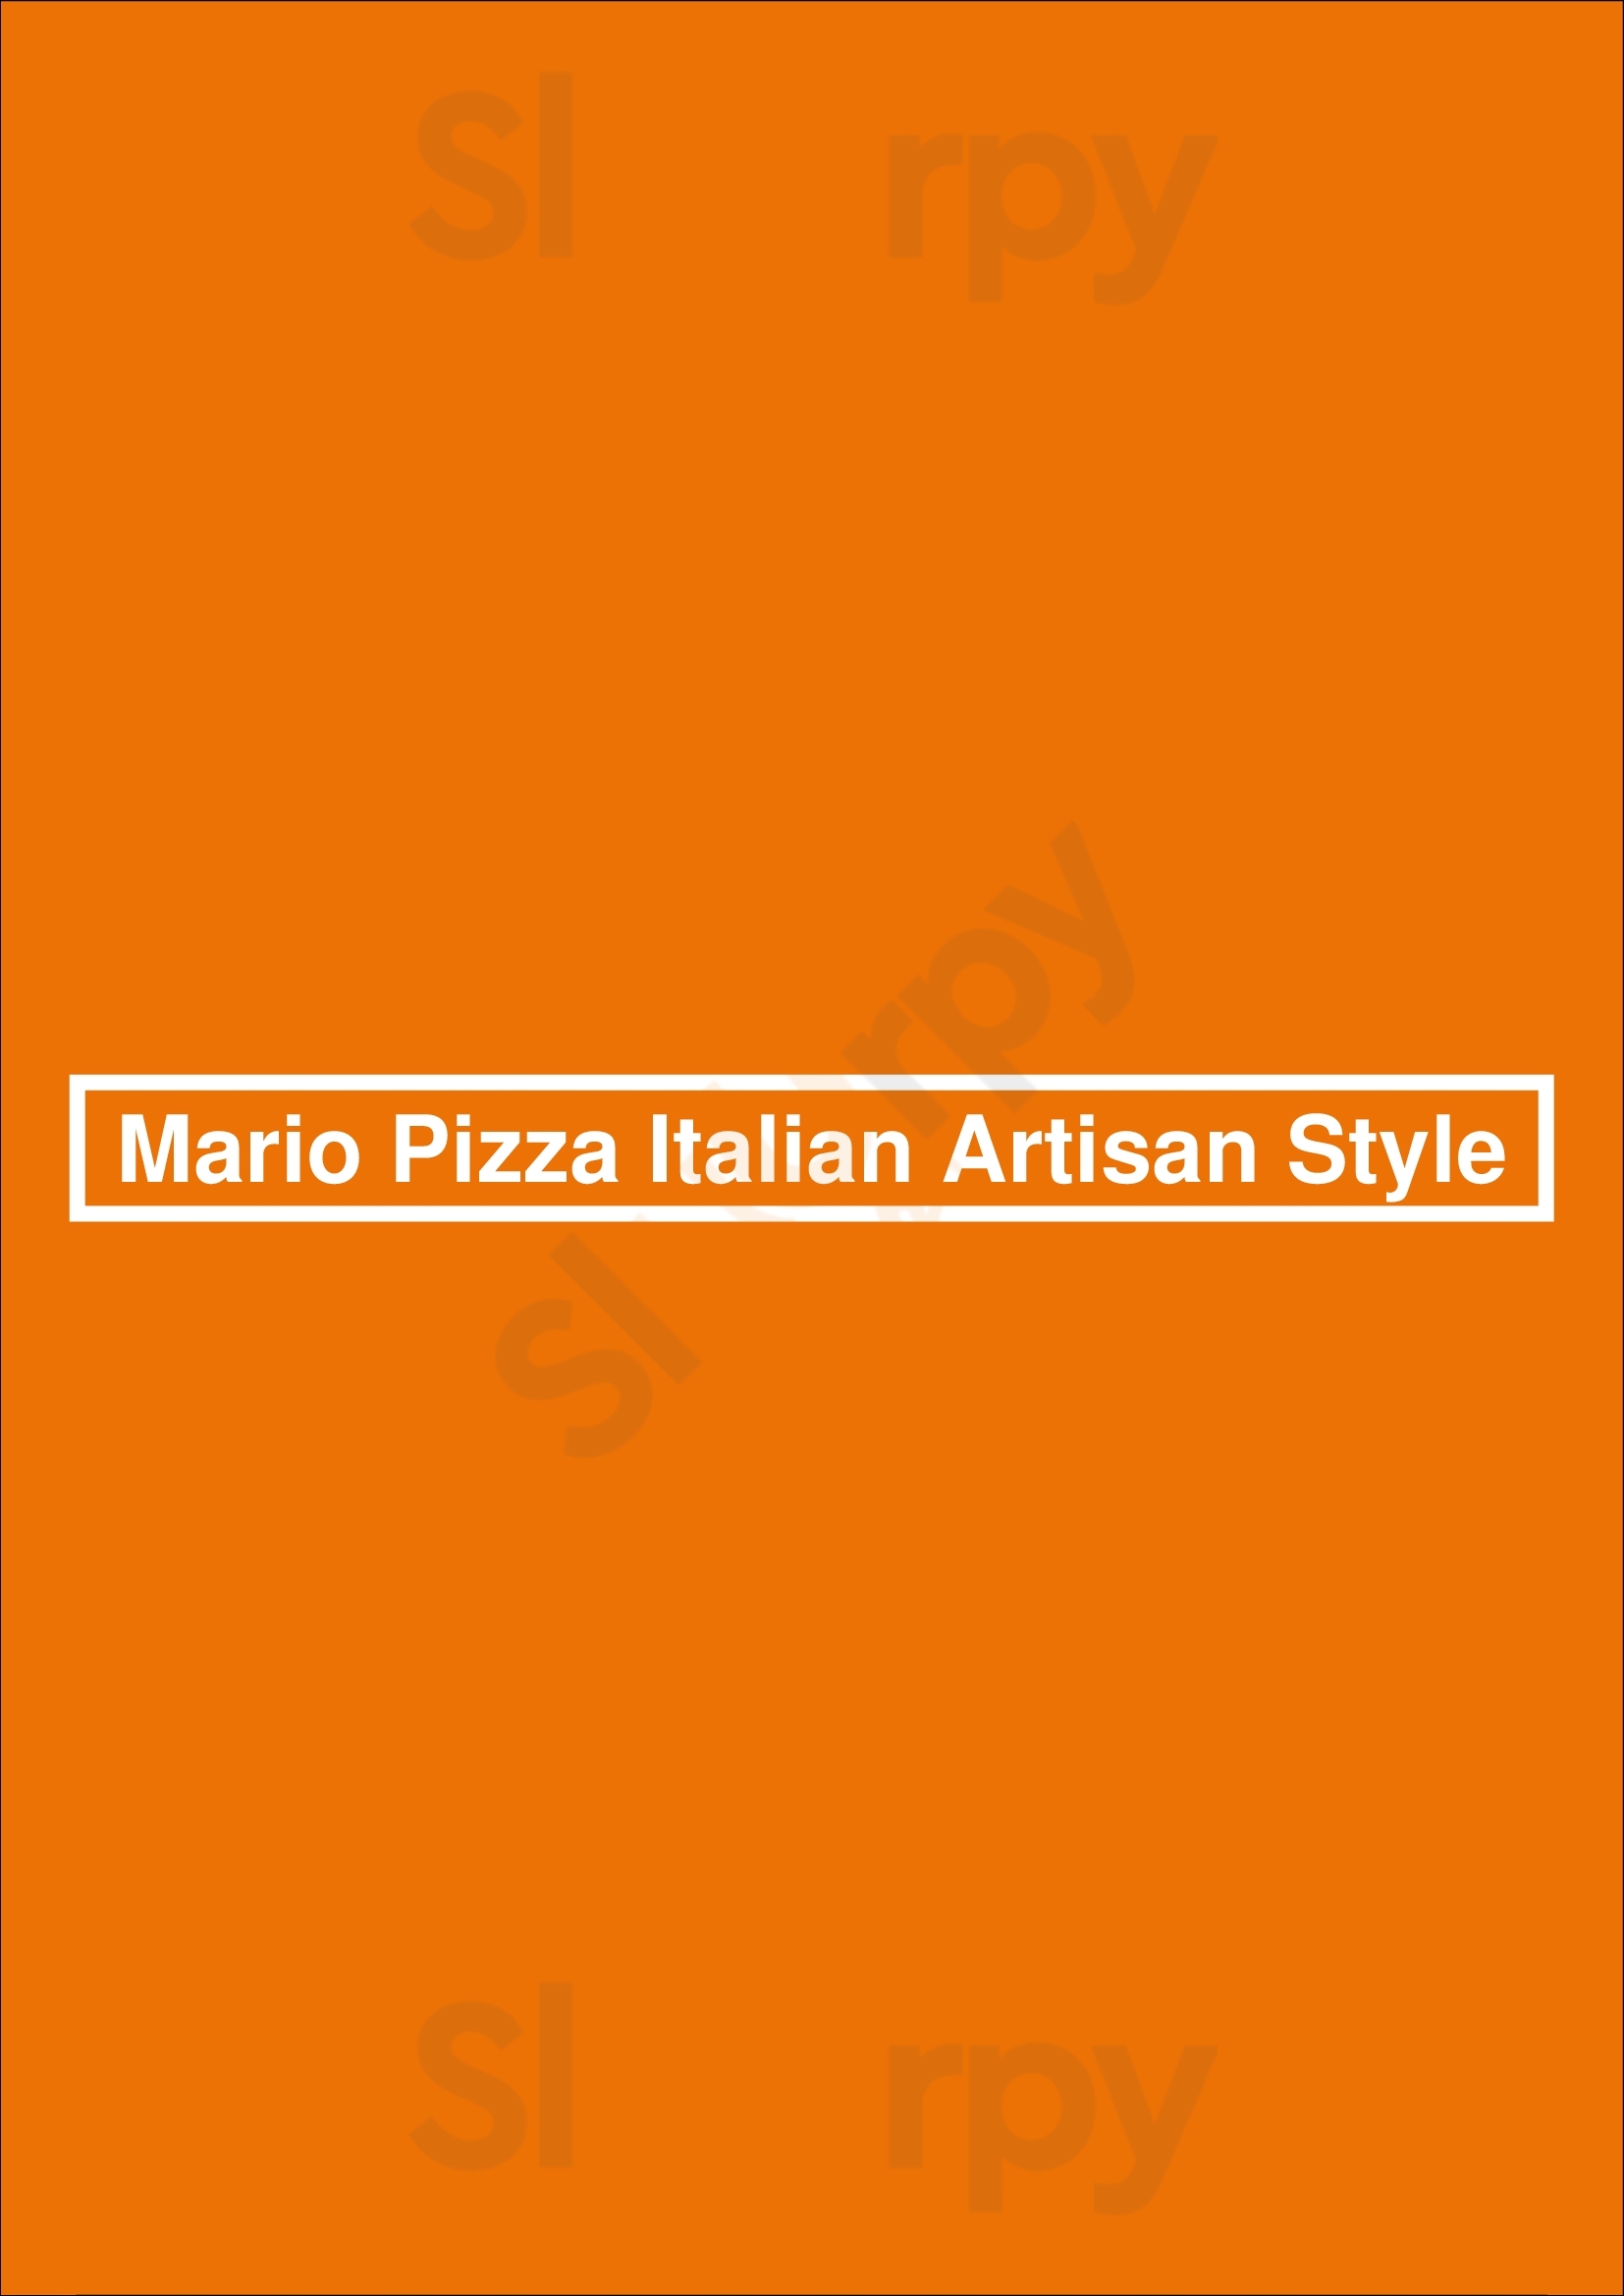 Mario Pizza Italian Artisan Style Exeter Menu - 1